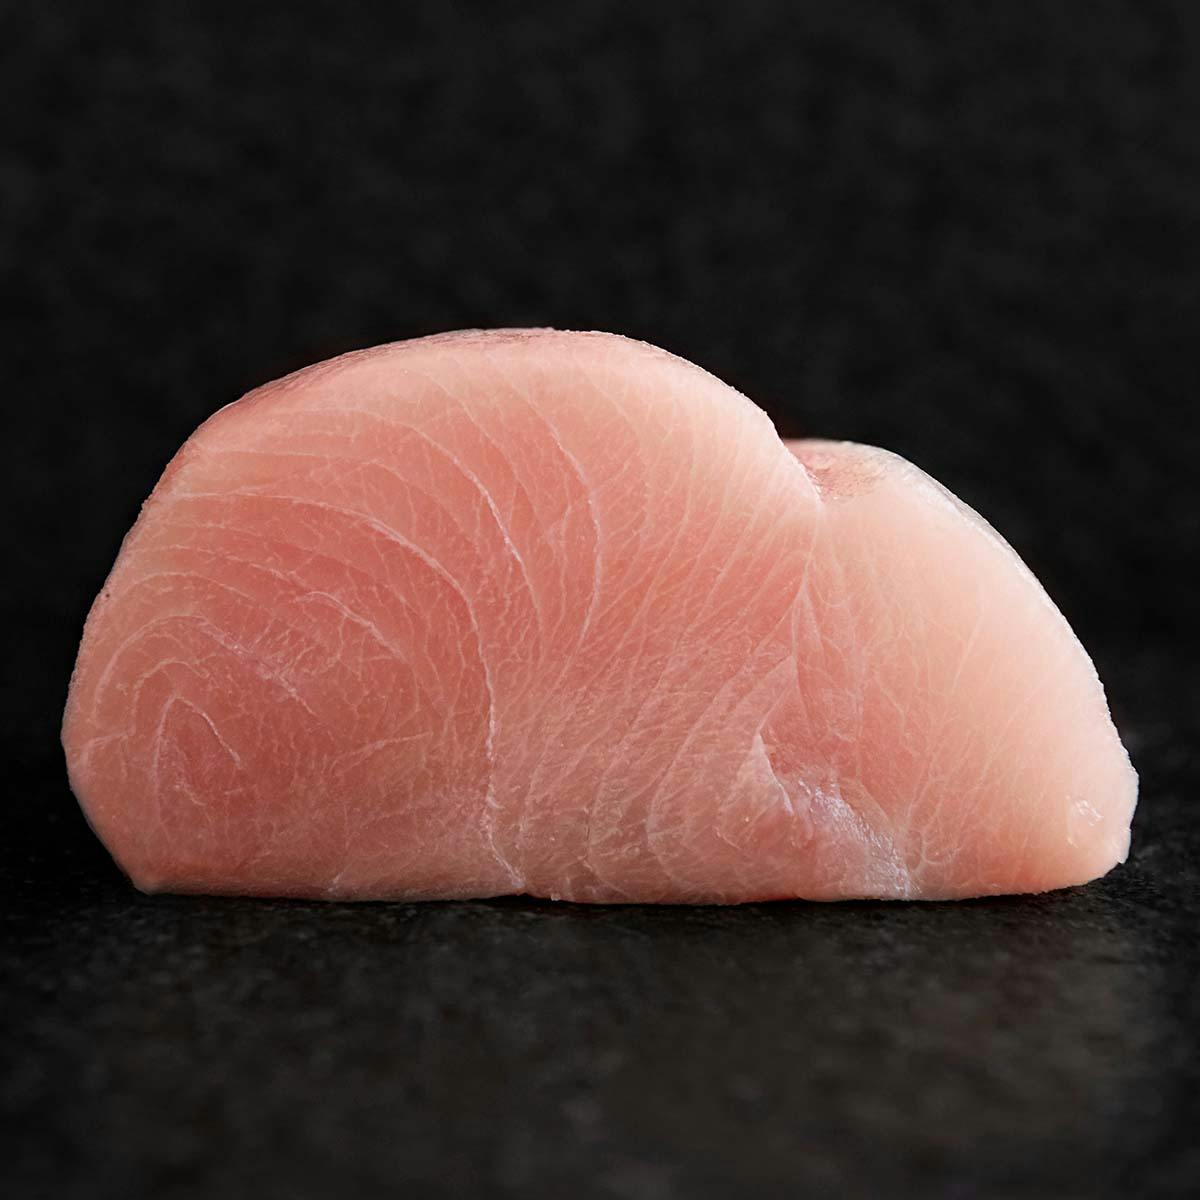 Premium Sushi Roll Kit for 8 MakiMaki